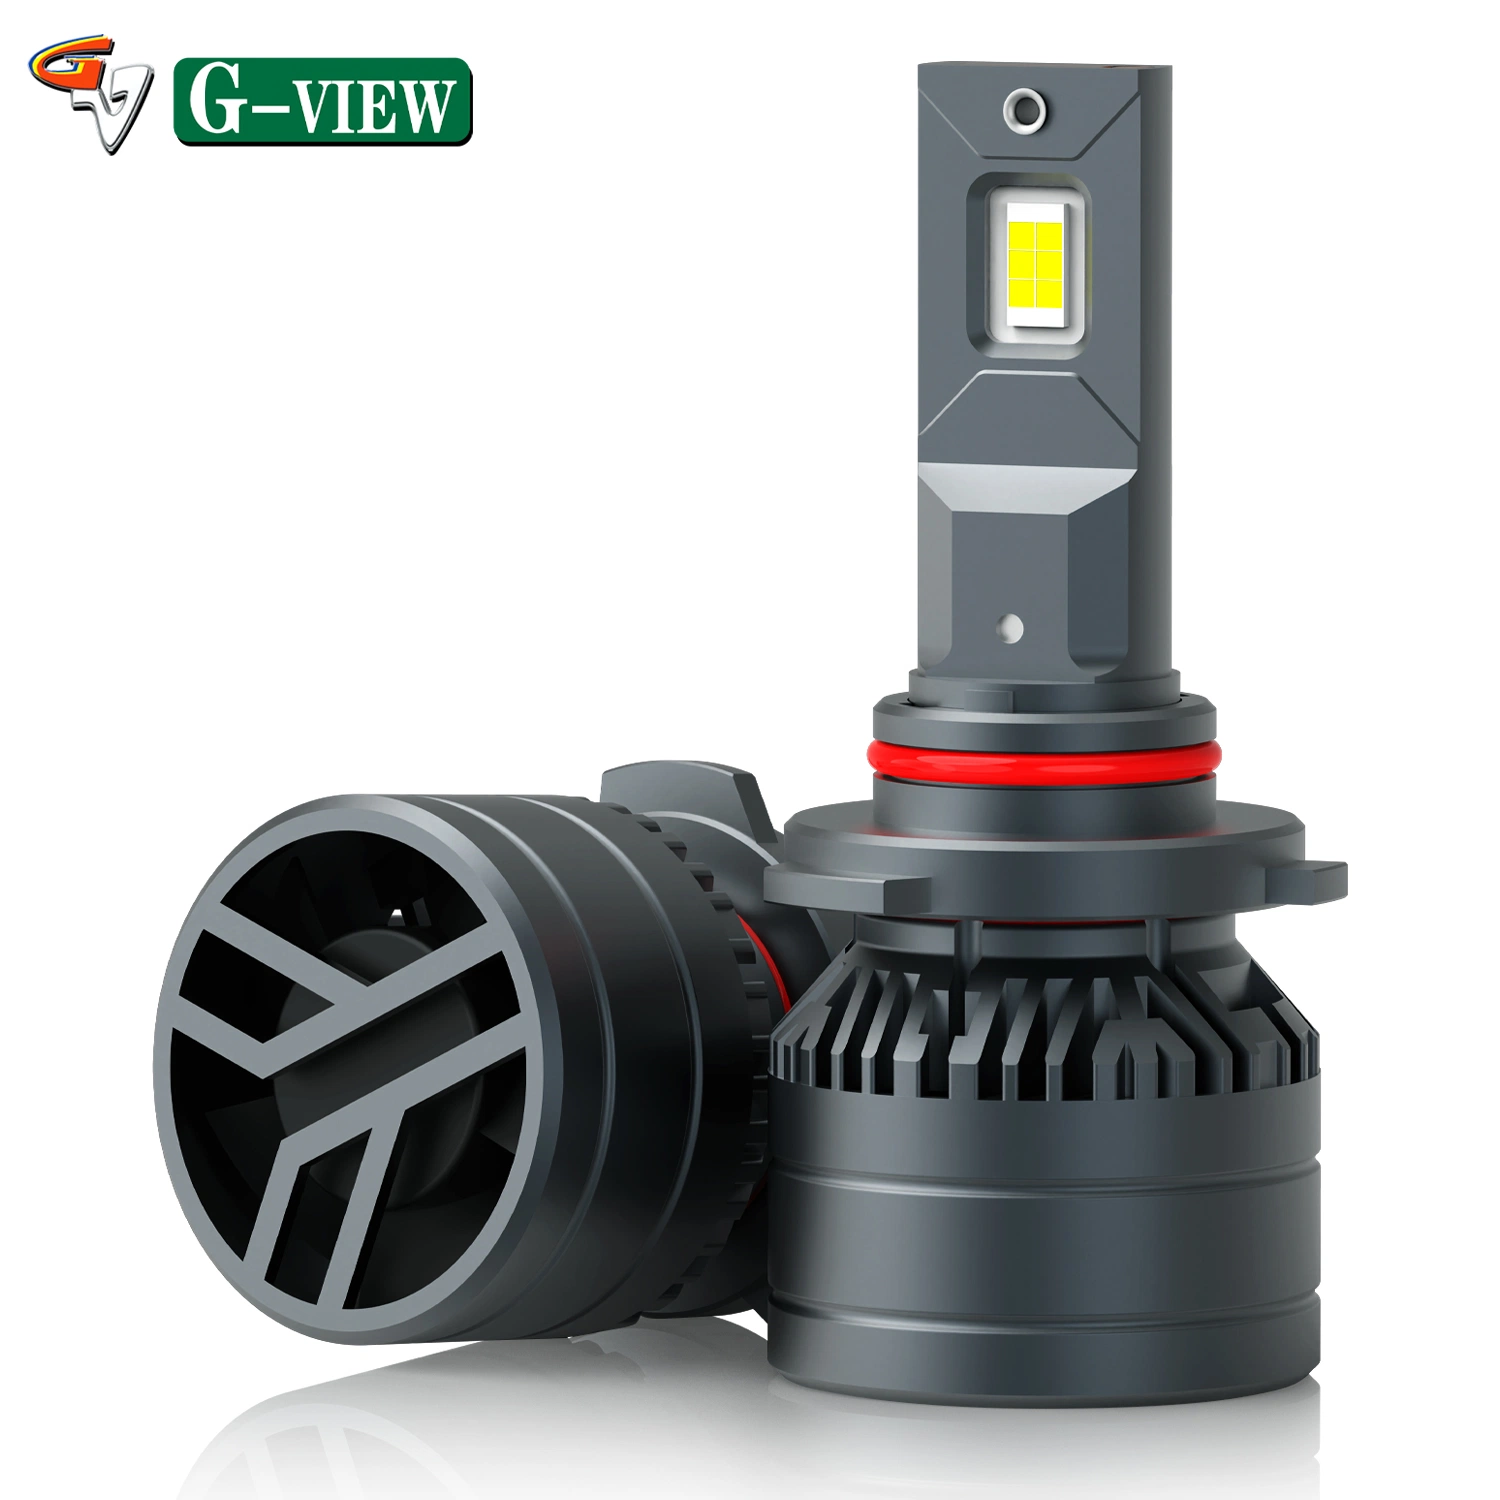 G-View 20000lm مصباح LED للإضاءة الأمامية للدراجات النارية / السيارات مصباح LED H4 H7 9005 9006 9007 شعاع منخفض 105 واط مصابيح LED عالية الطاقة